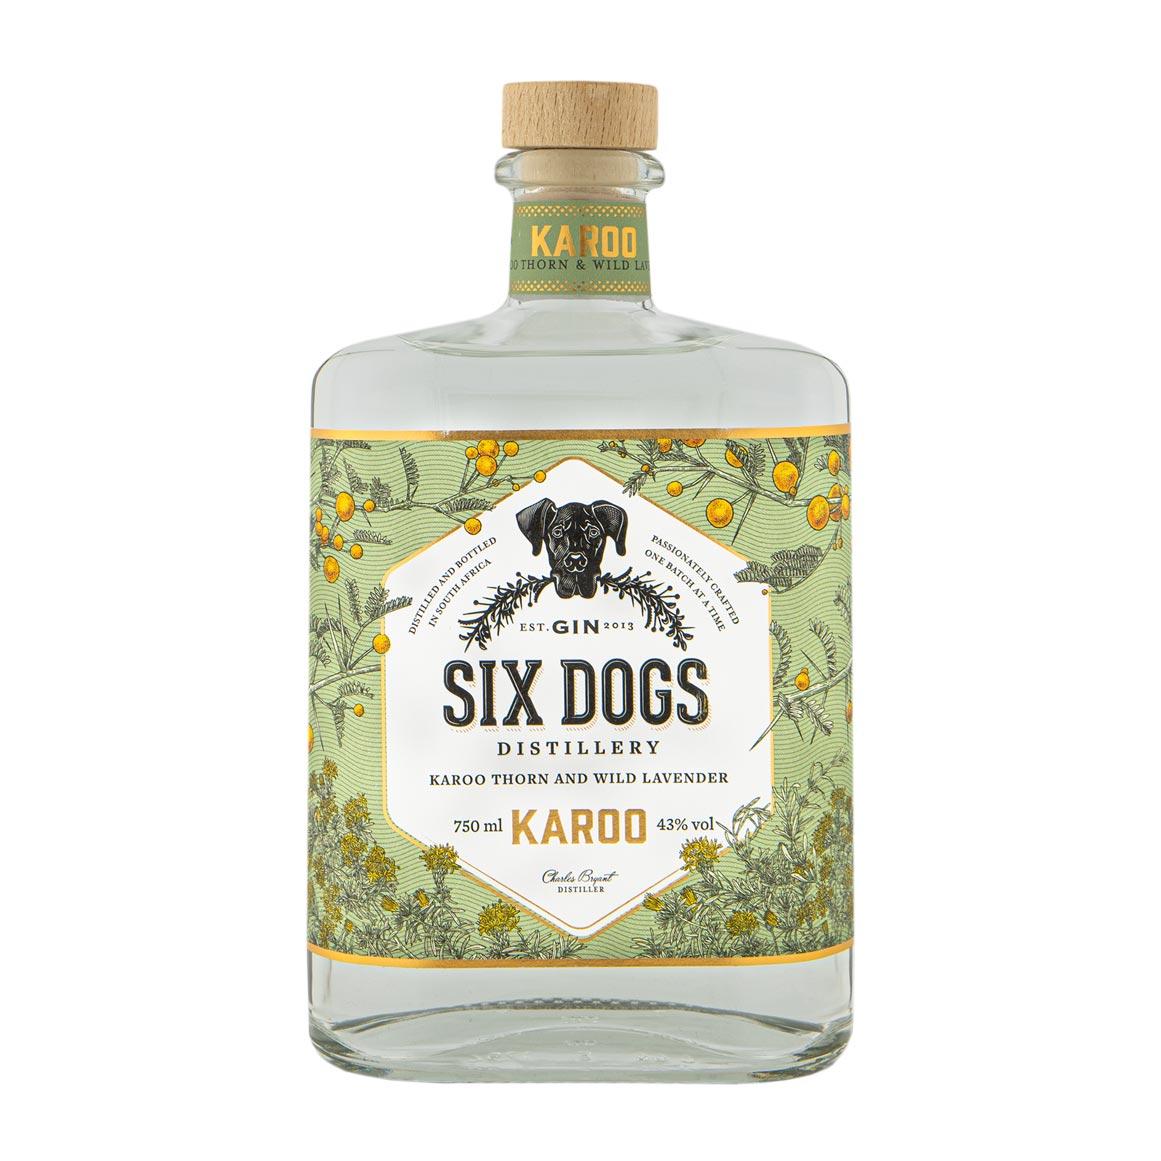 Six Dogs Karoo ml Gin 750